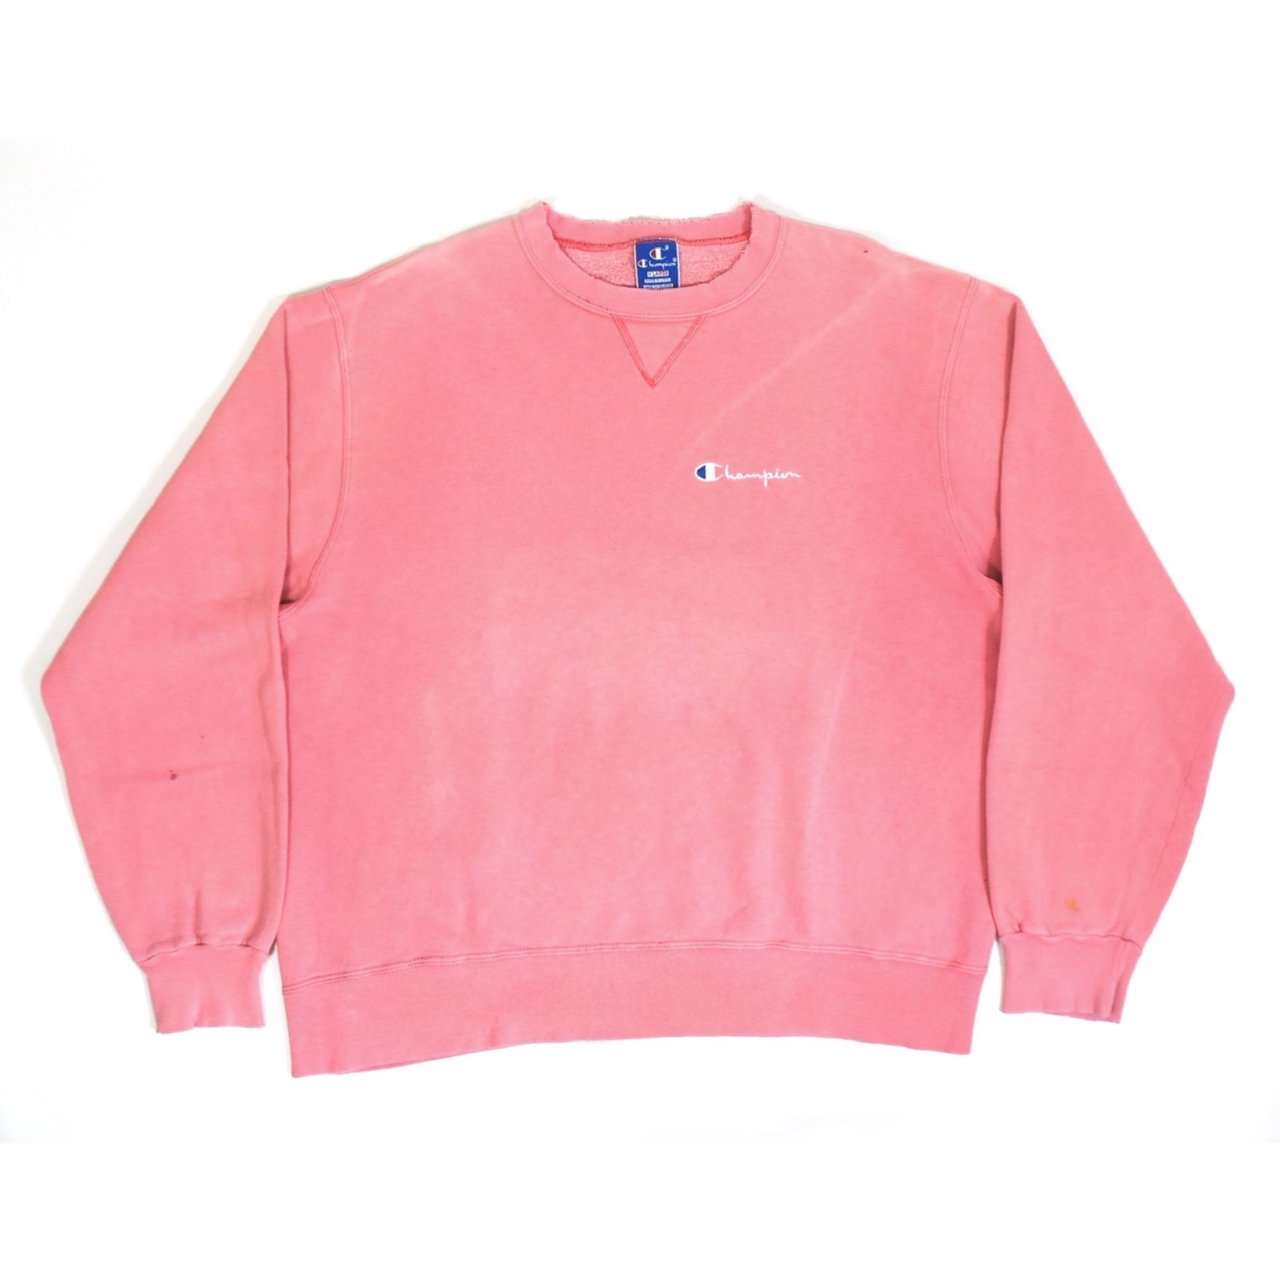 1990s CHAMPION Sweat shirt XL MADE IN USA Pink